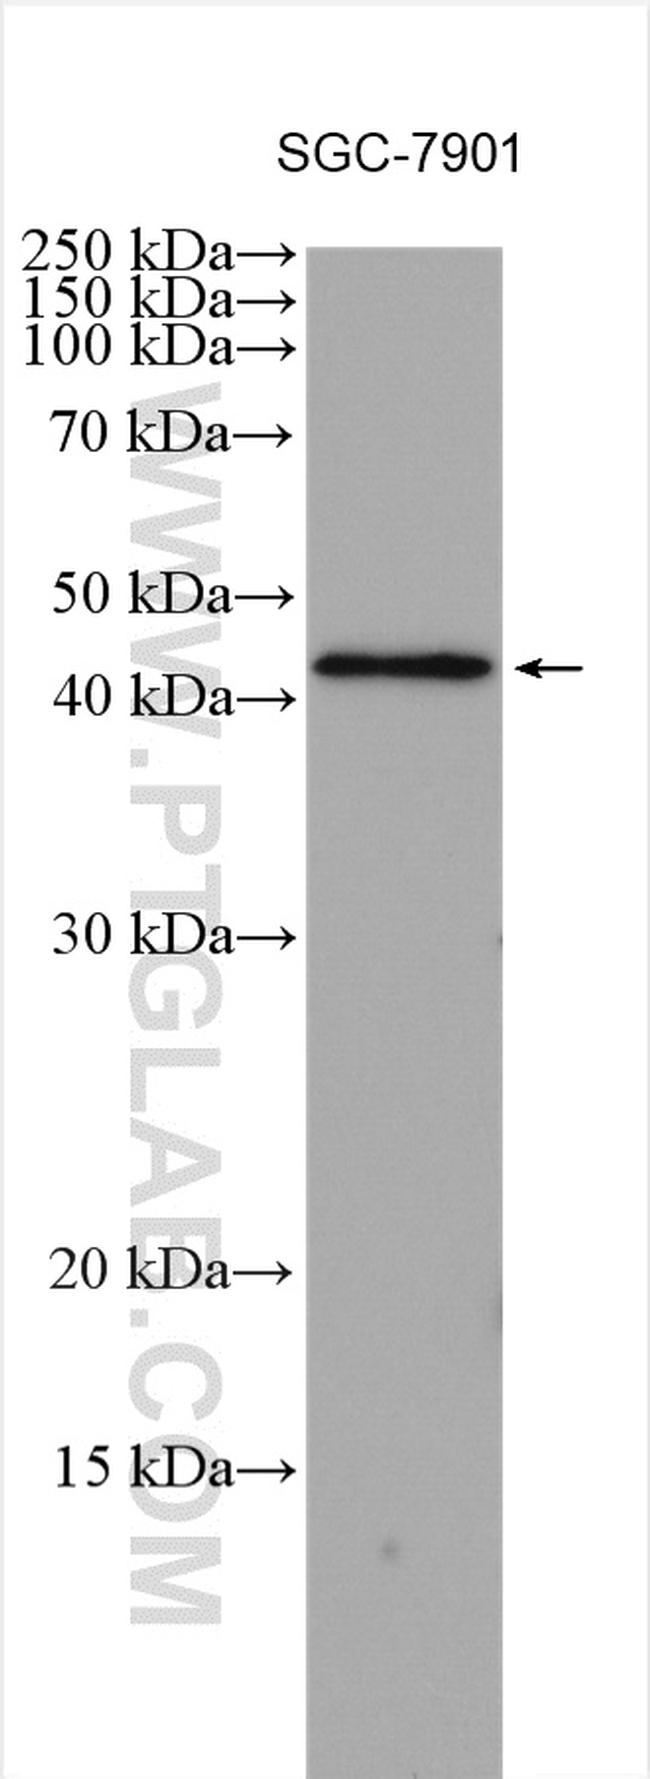 TNFSF18 Antibody in Western Blot (WB)